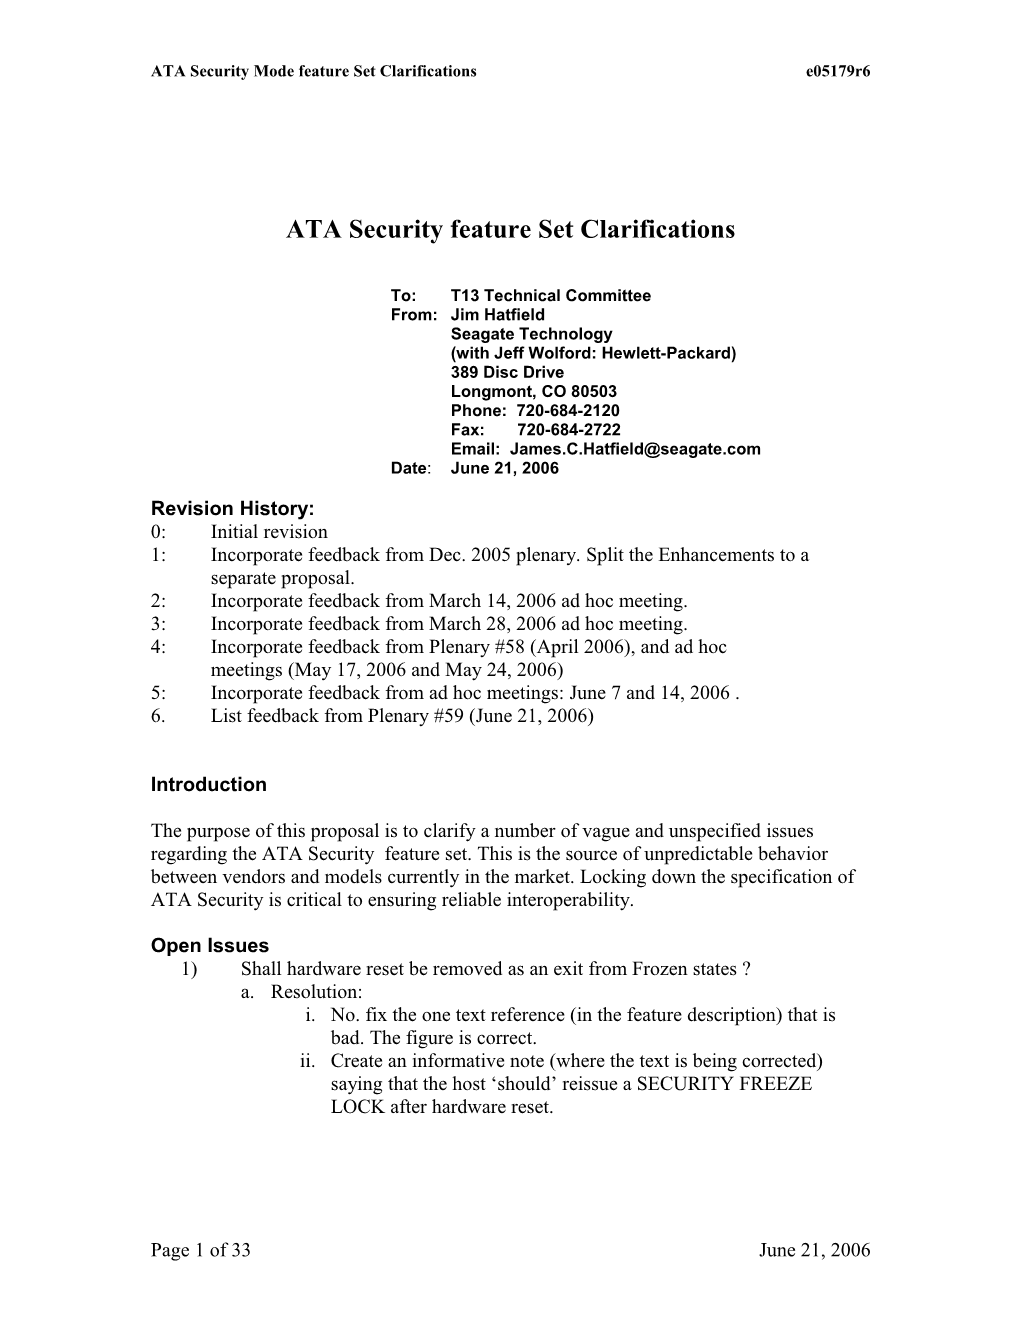 ATA Security Feature Set Clarifications